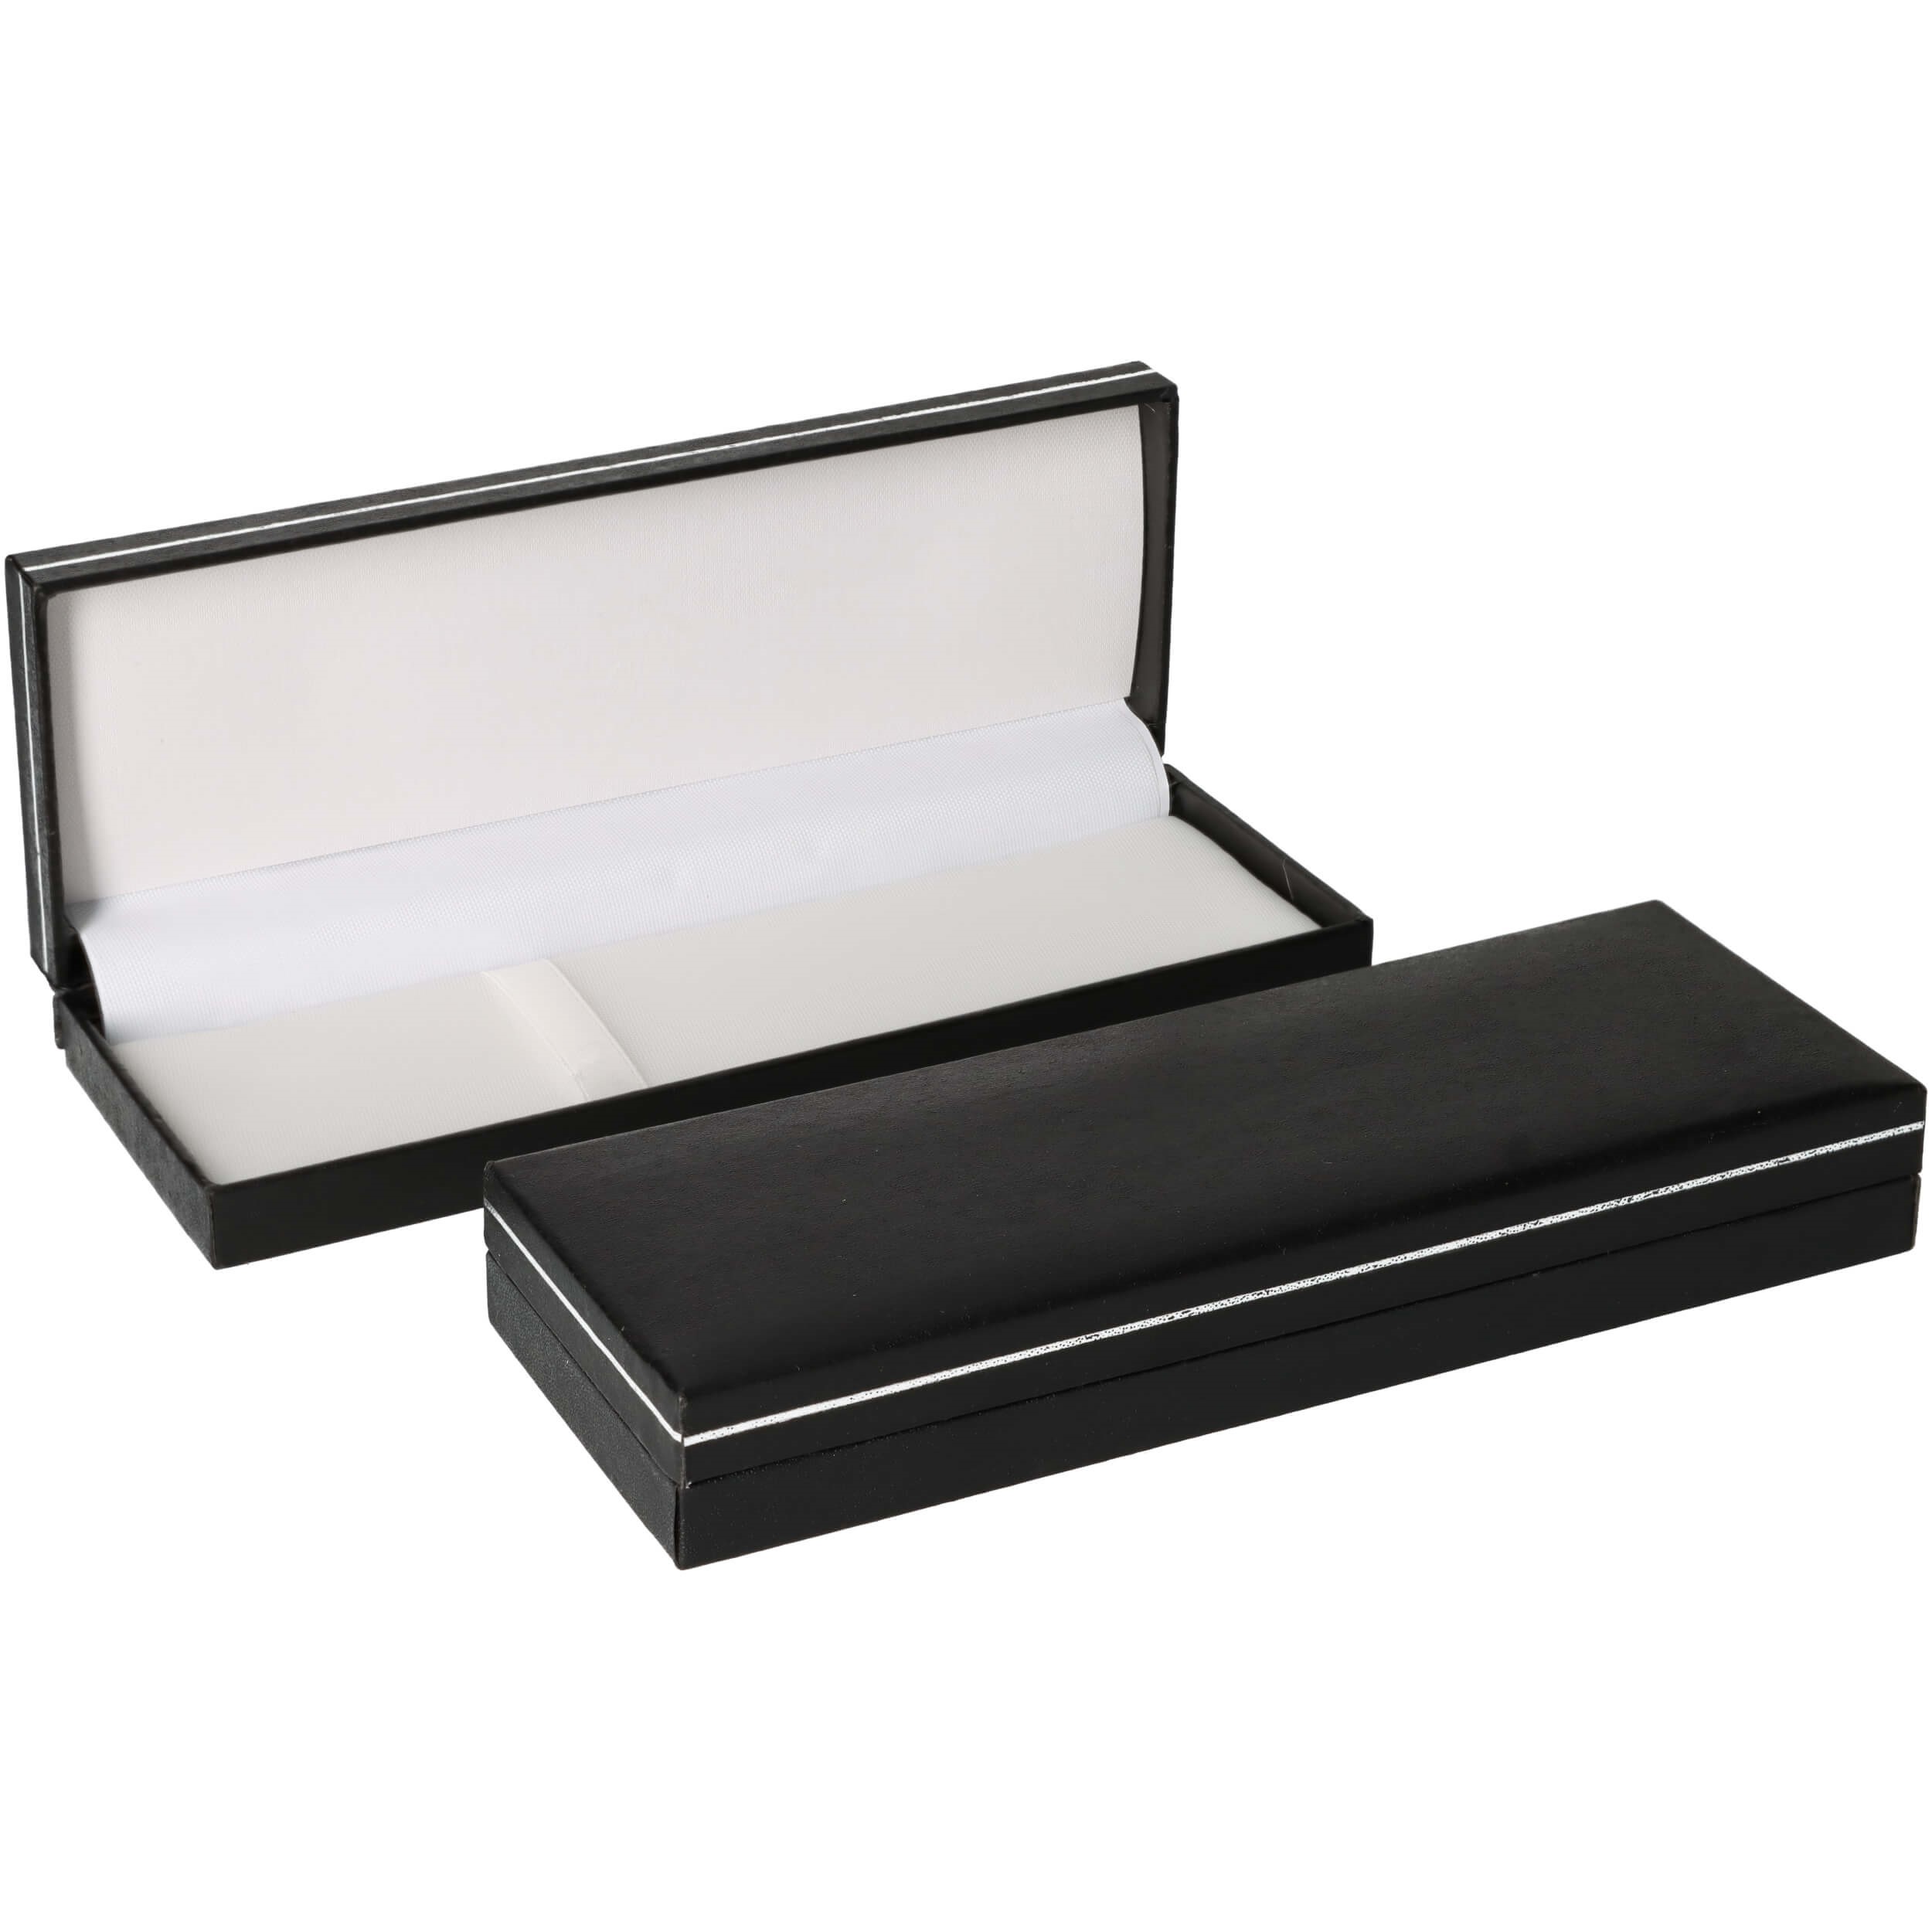 Biros gift box black - Leather look cardboard & paper - 170x62x25mm - White nylon lining - 74g lightweight